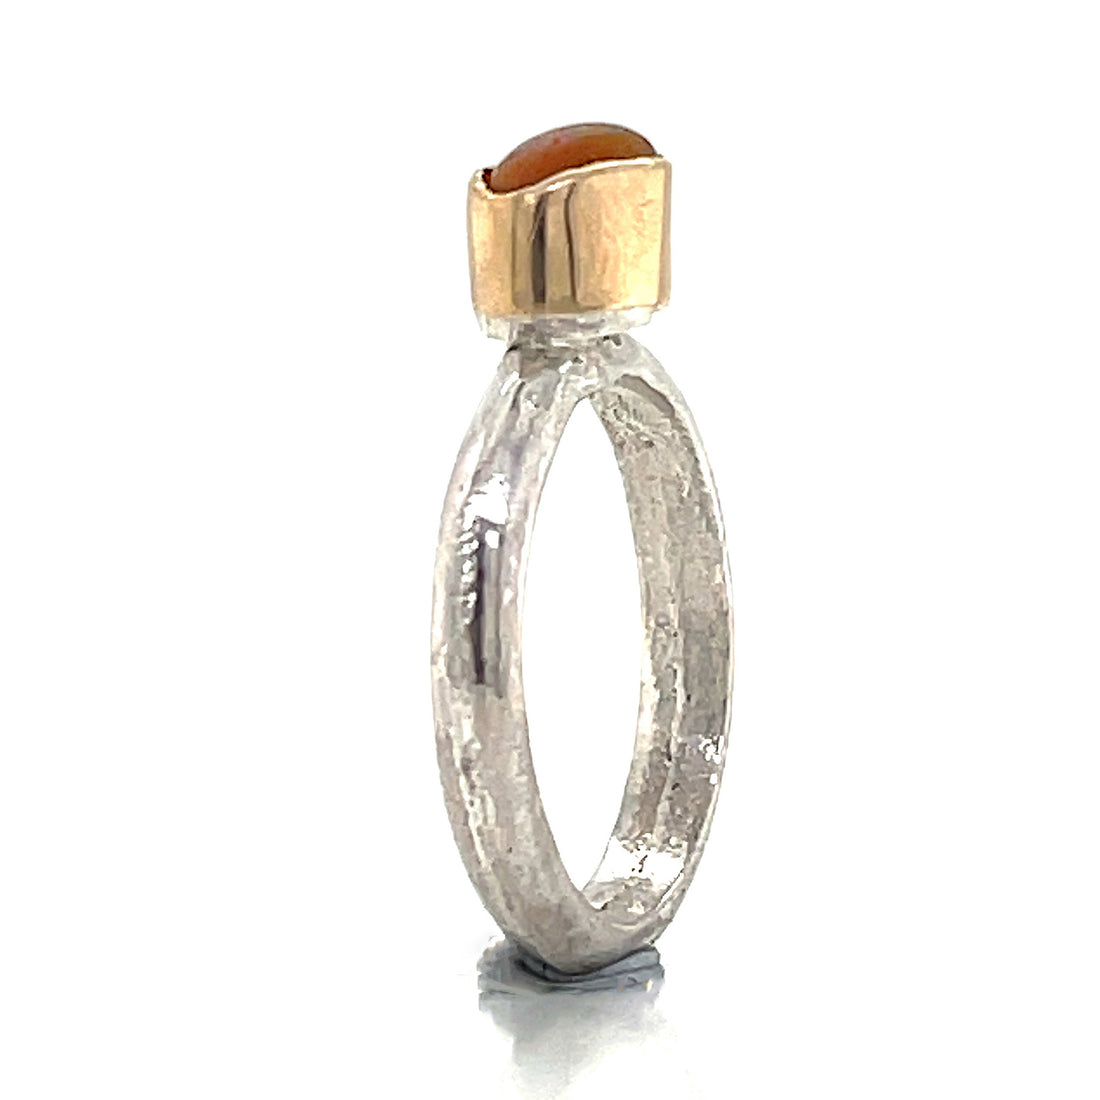 amber seaglass ring, bezel set ring made in australia